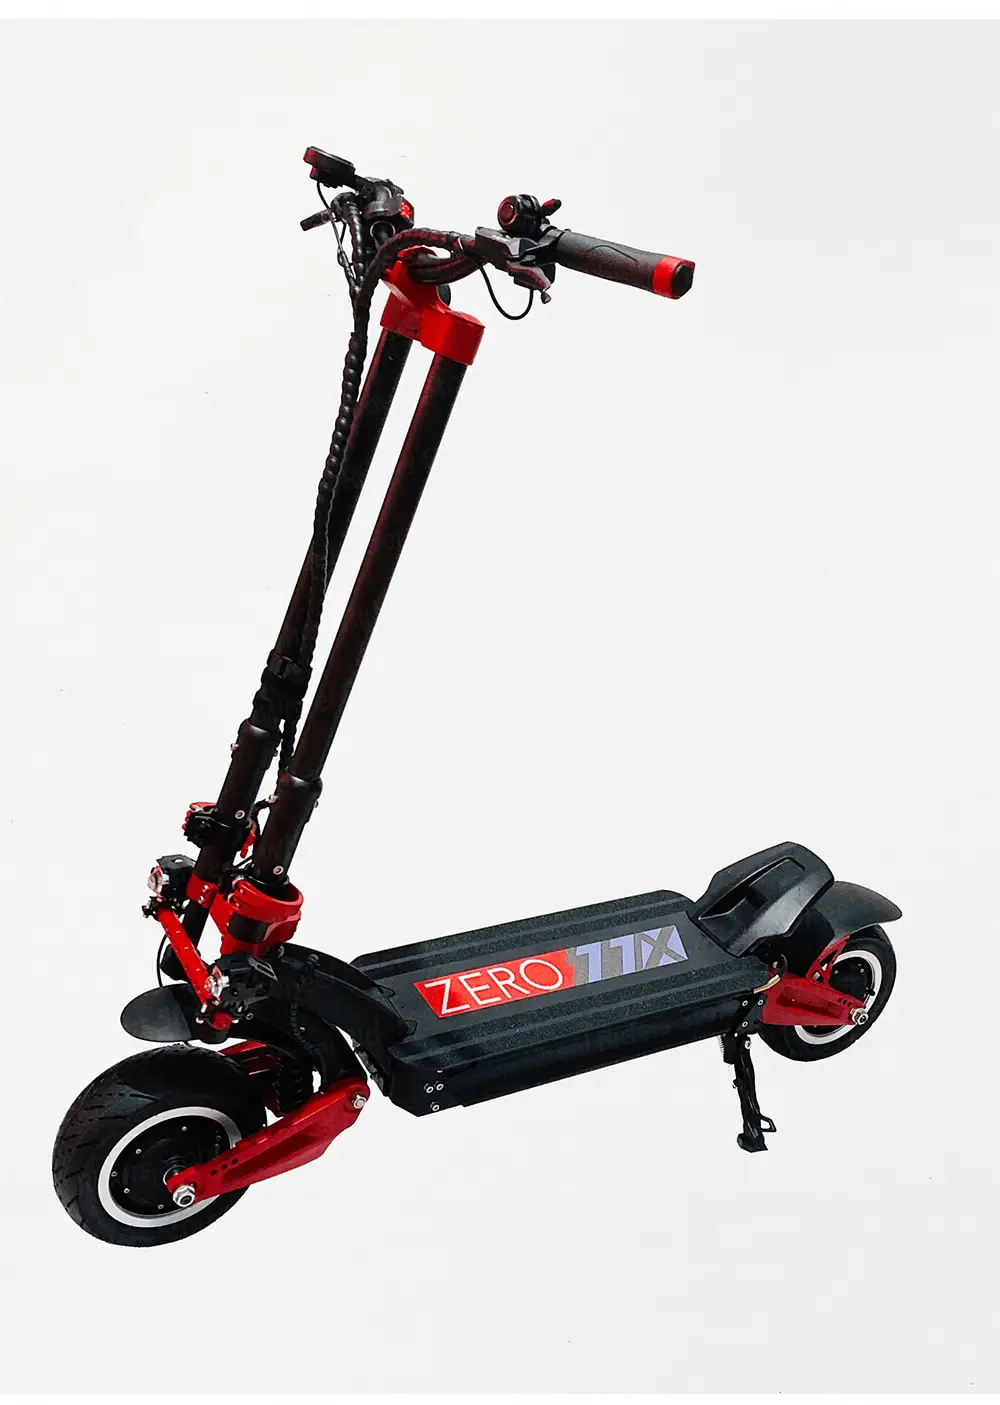 Zero 11x electric scooter